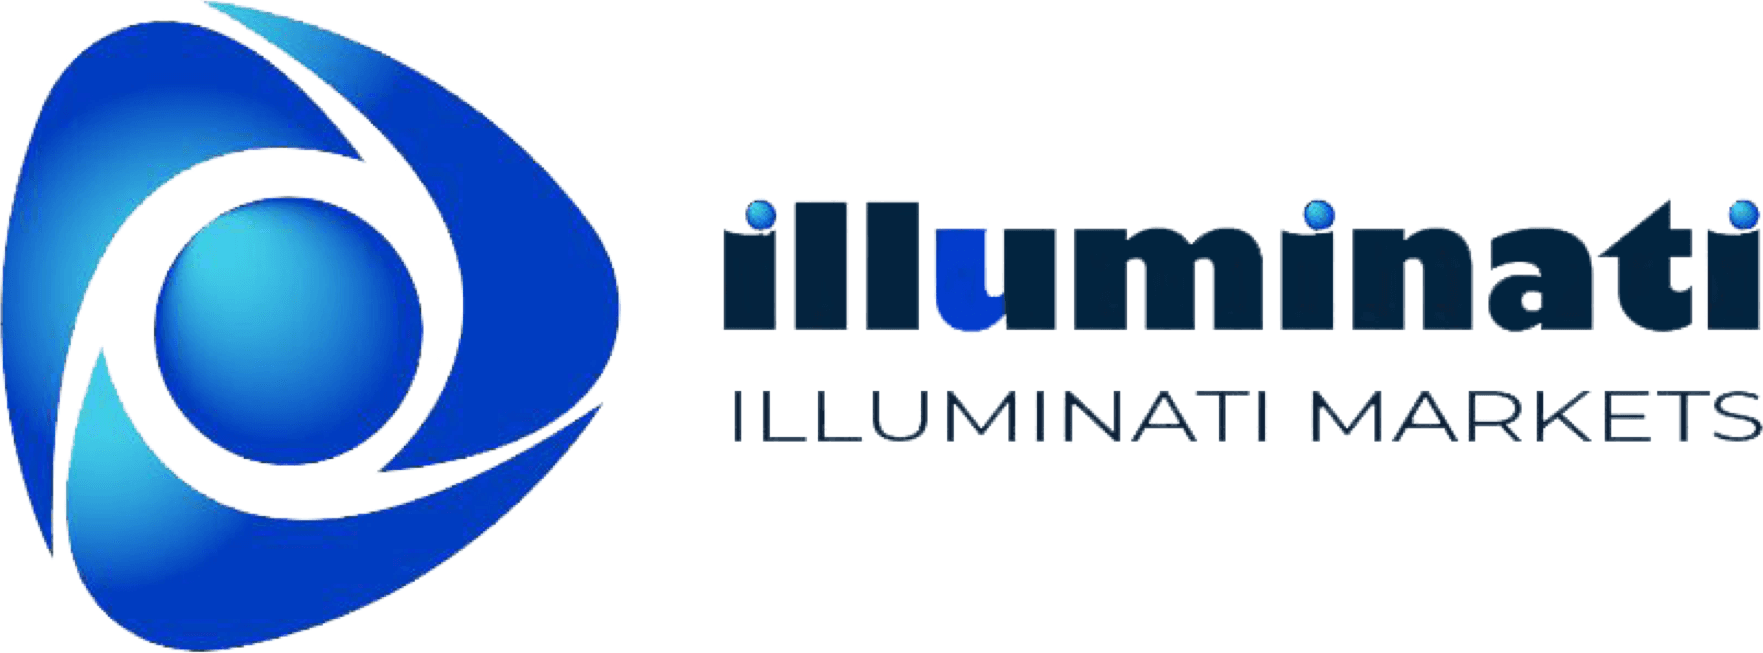 Illuminati Markets limited